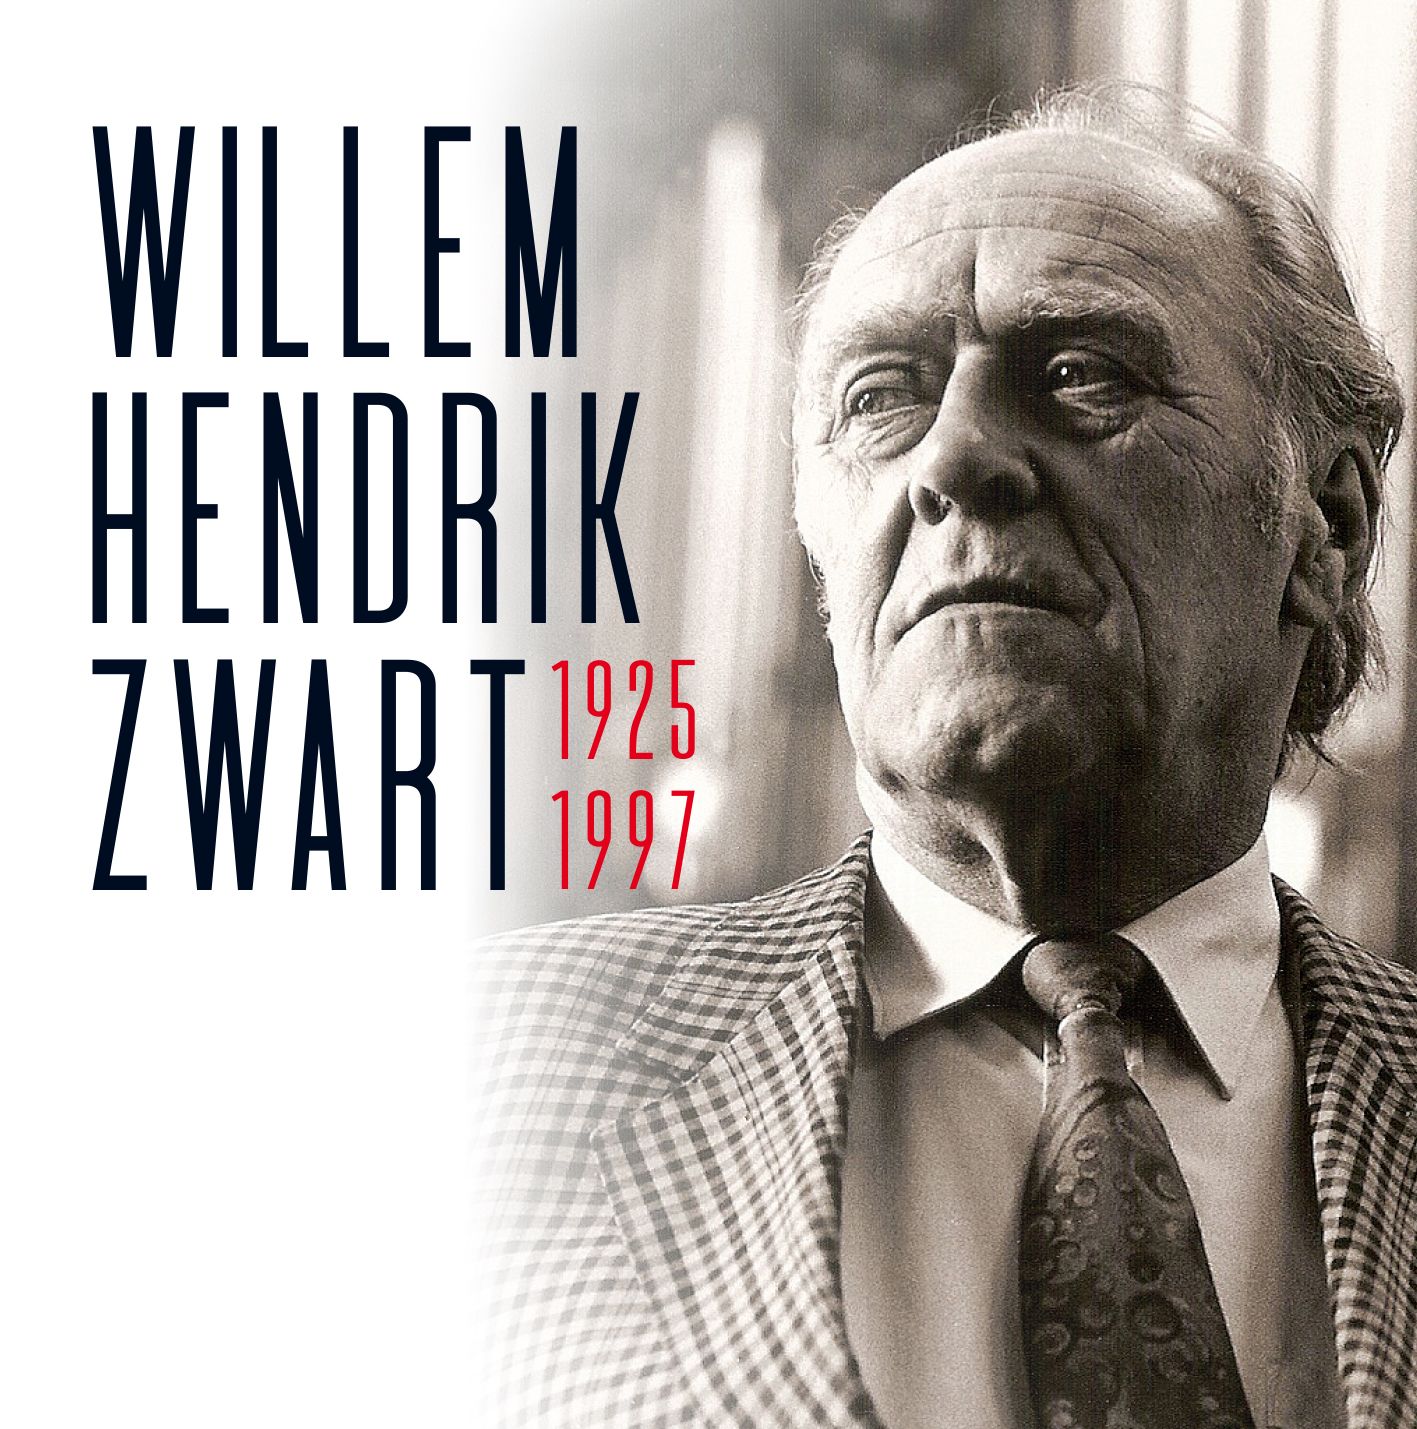 Willem Hendrik Zwart 1925/1977